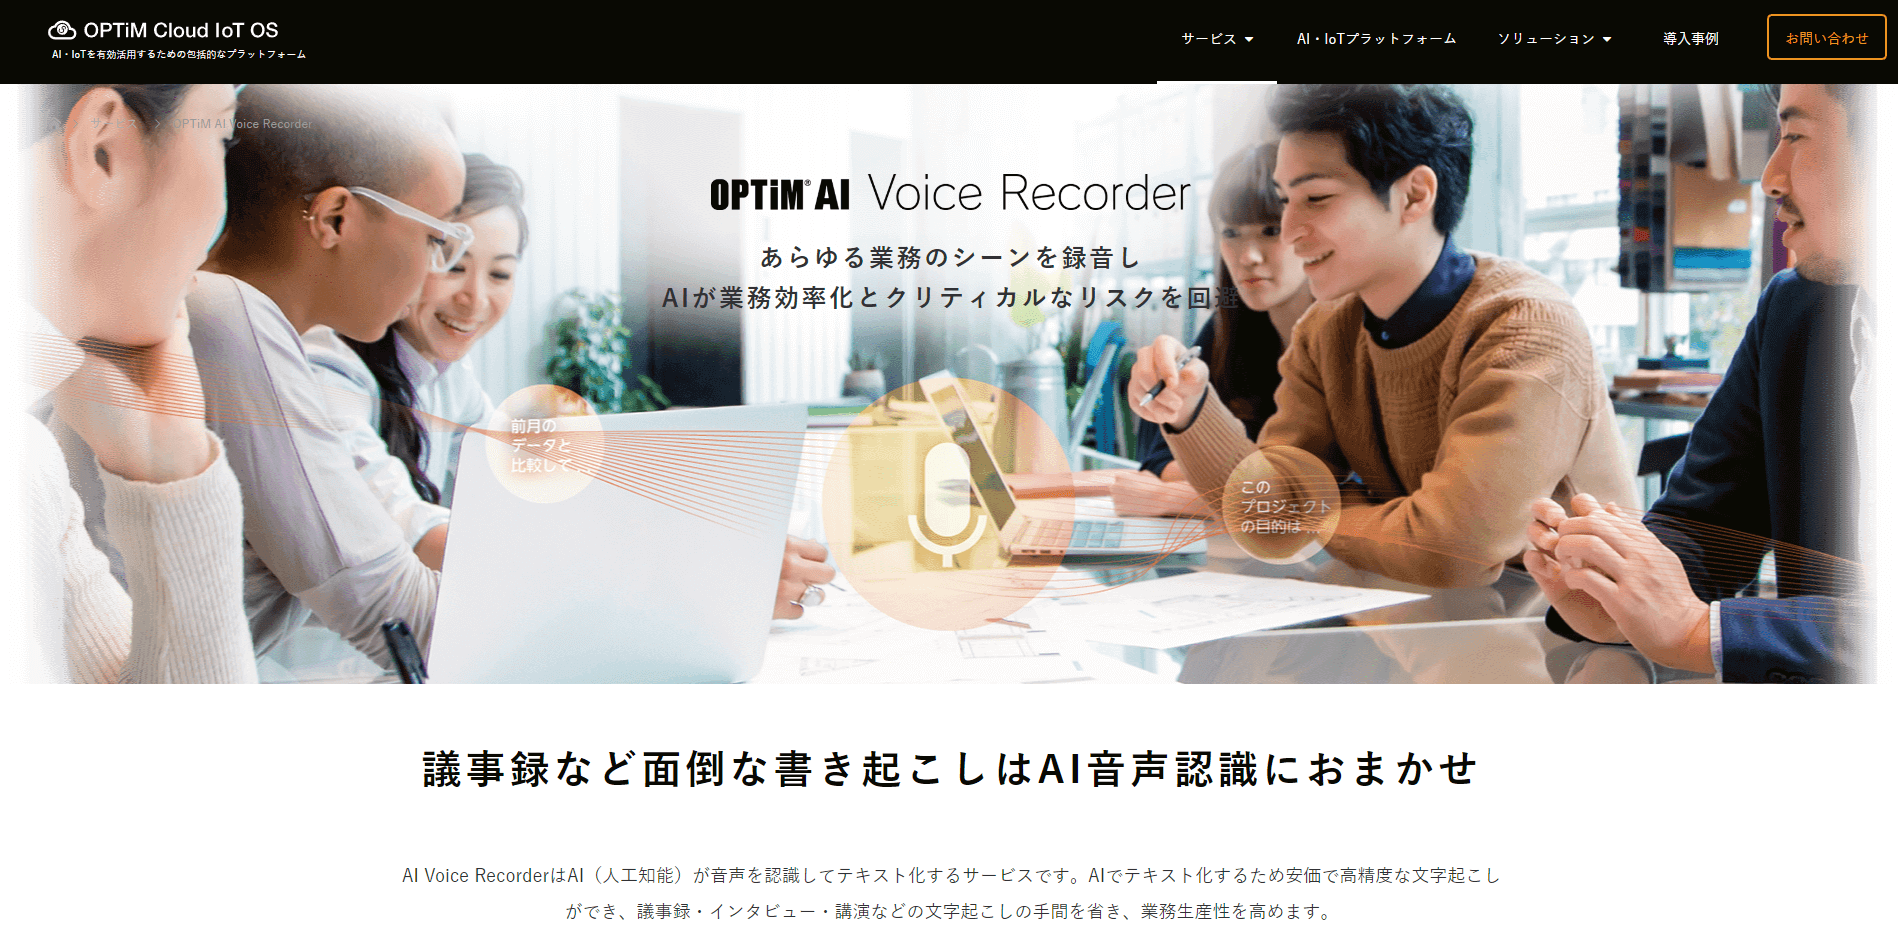 OPTiM AI Voice Recorder